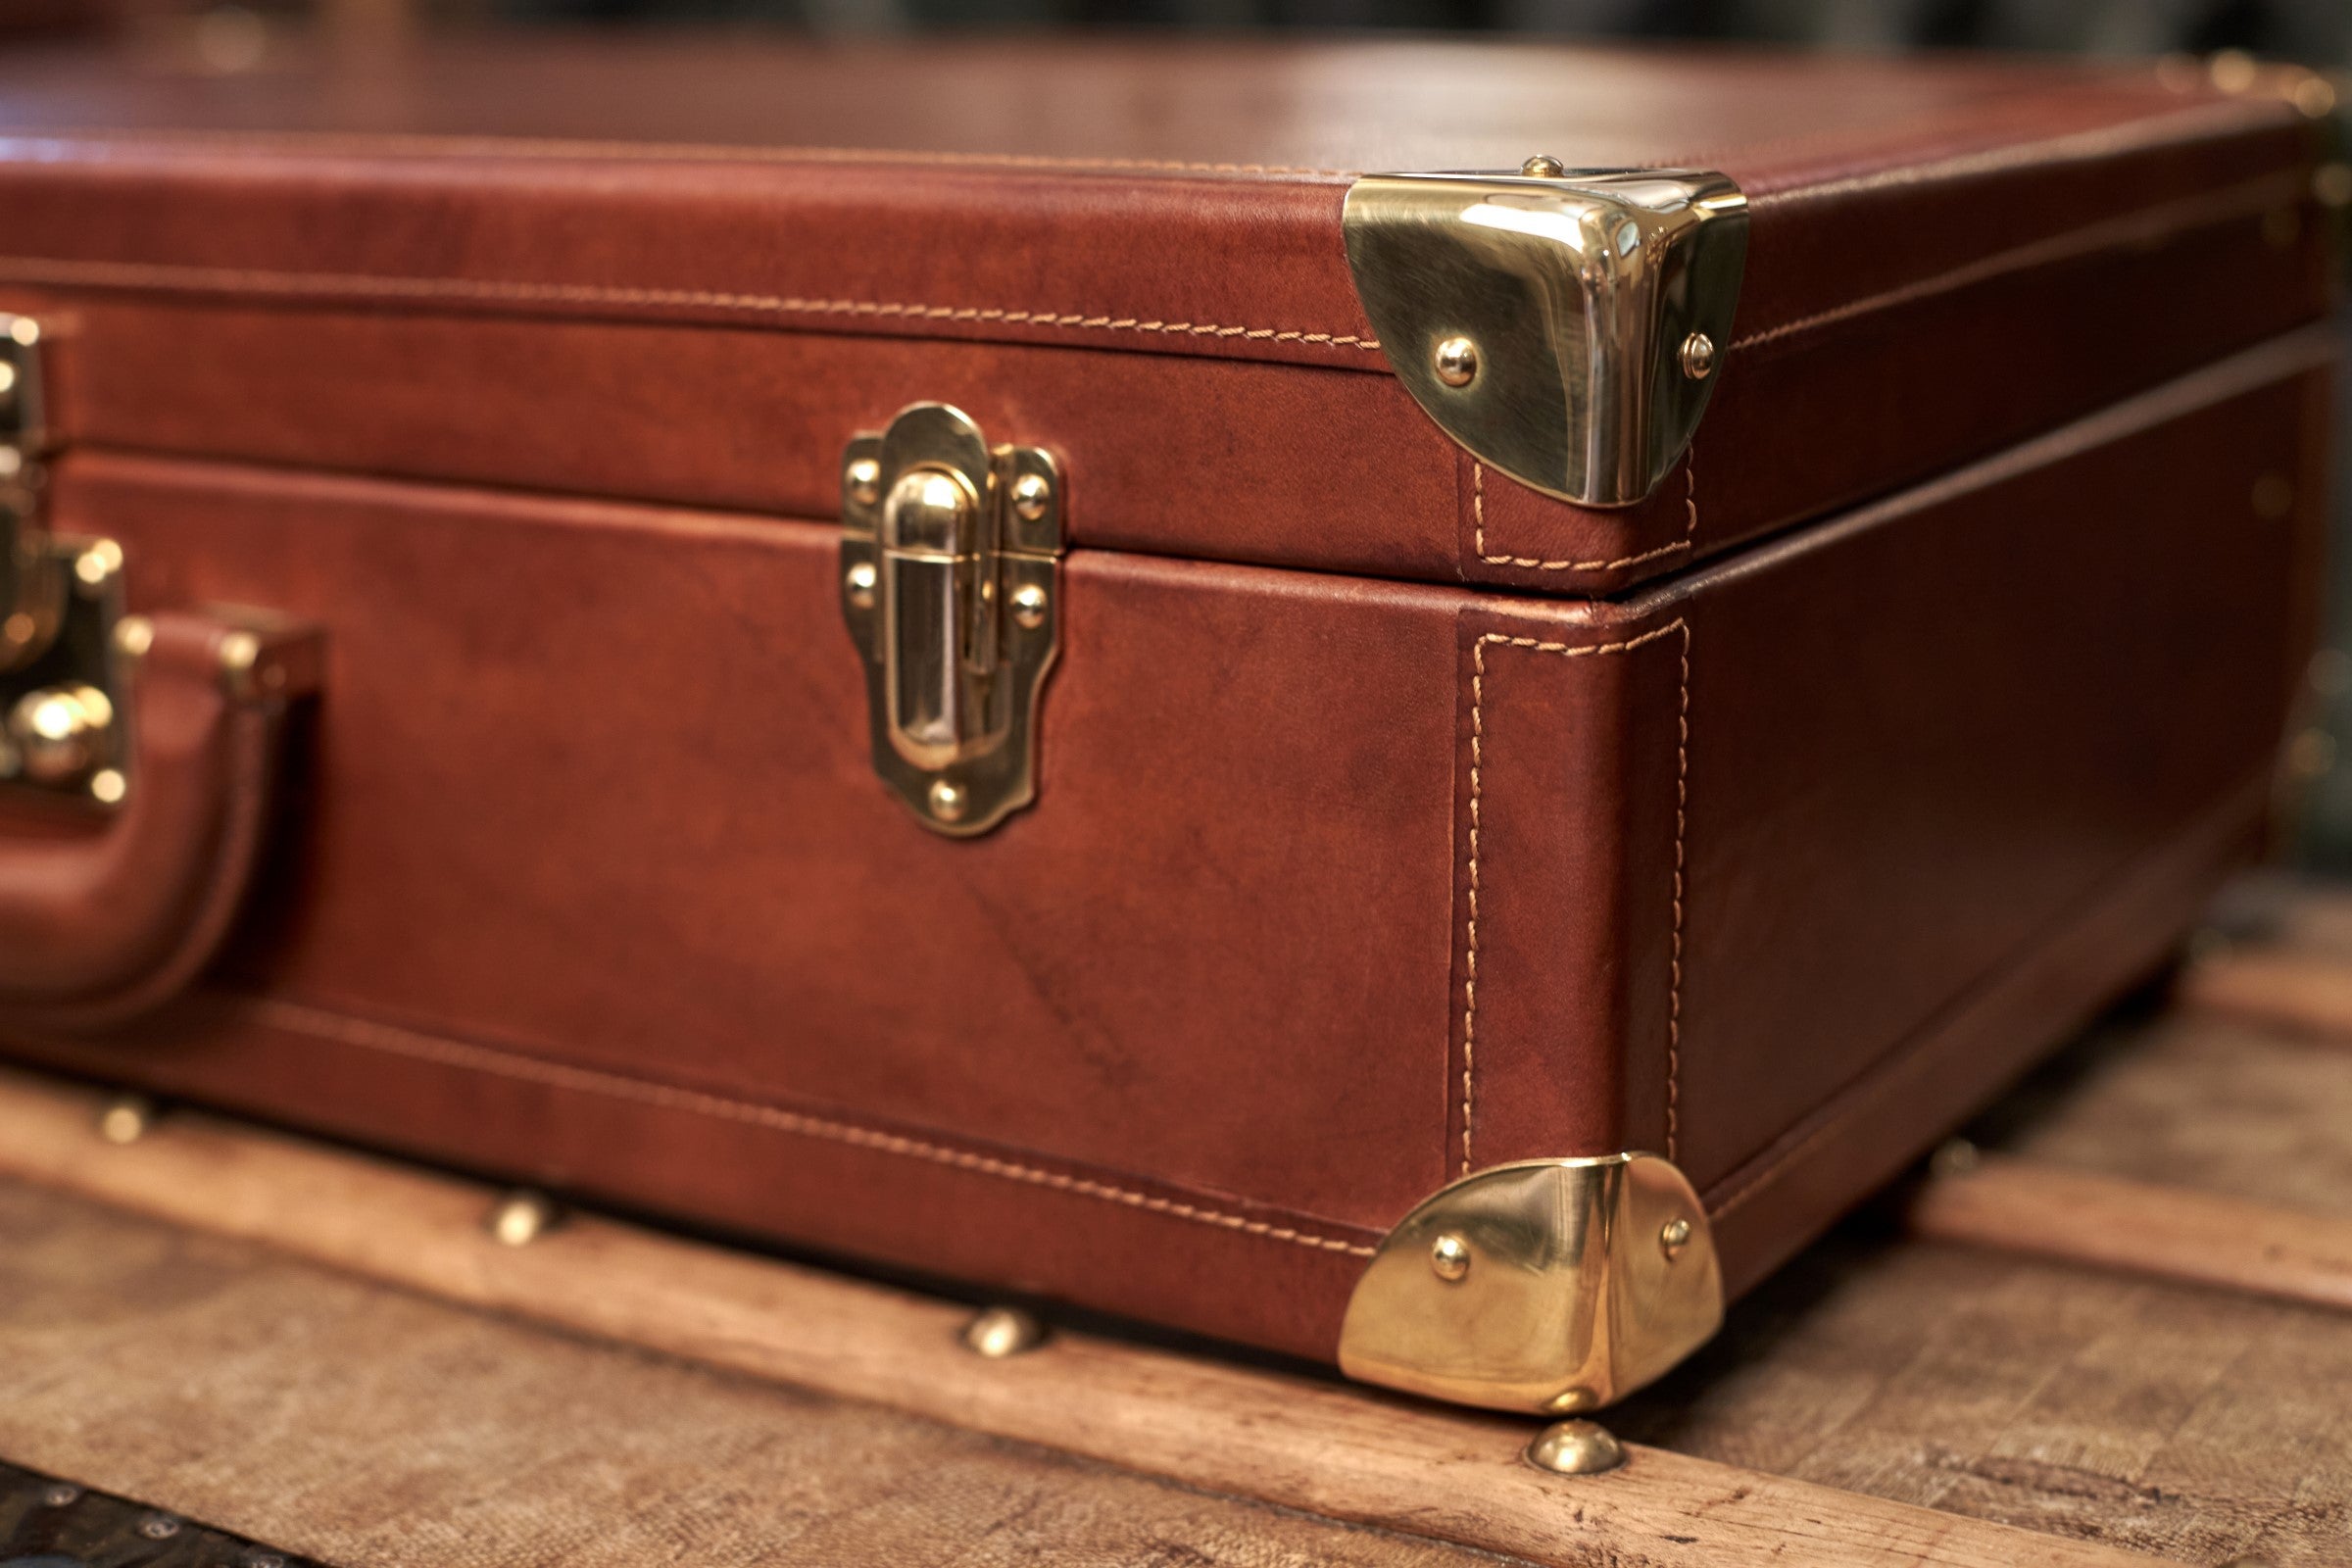 Bernardini Humidor Briefcase - Brown leather and Mahogany - N° 01/30